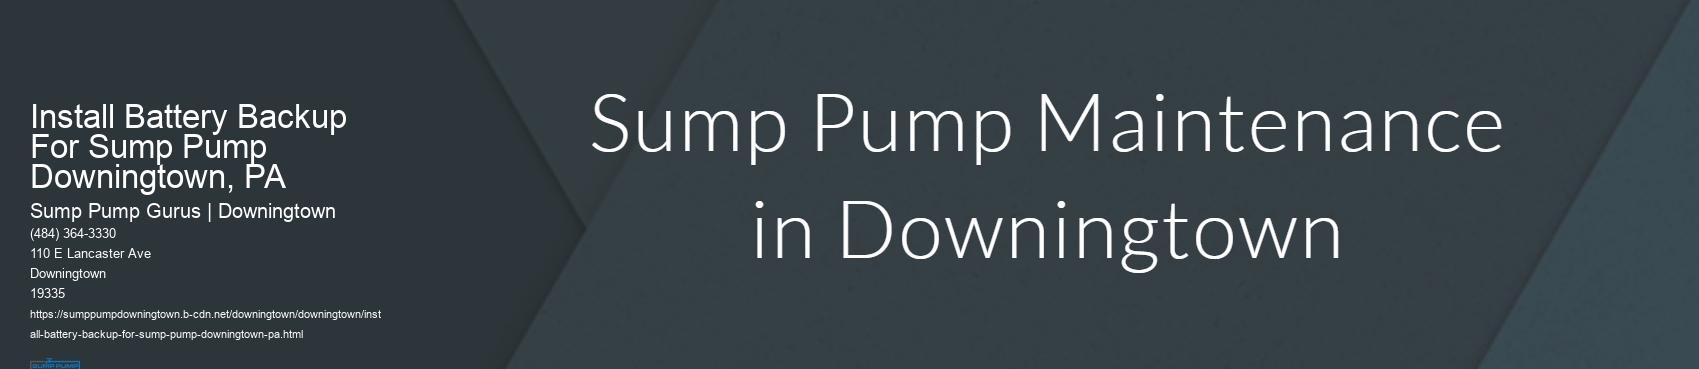 Install Battery Backup For Sump Pump Downingtown, PA